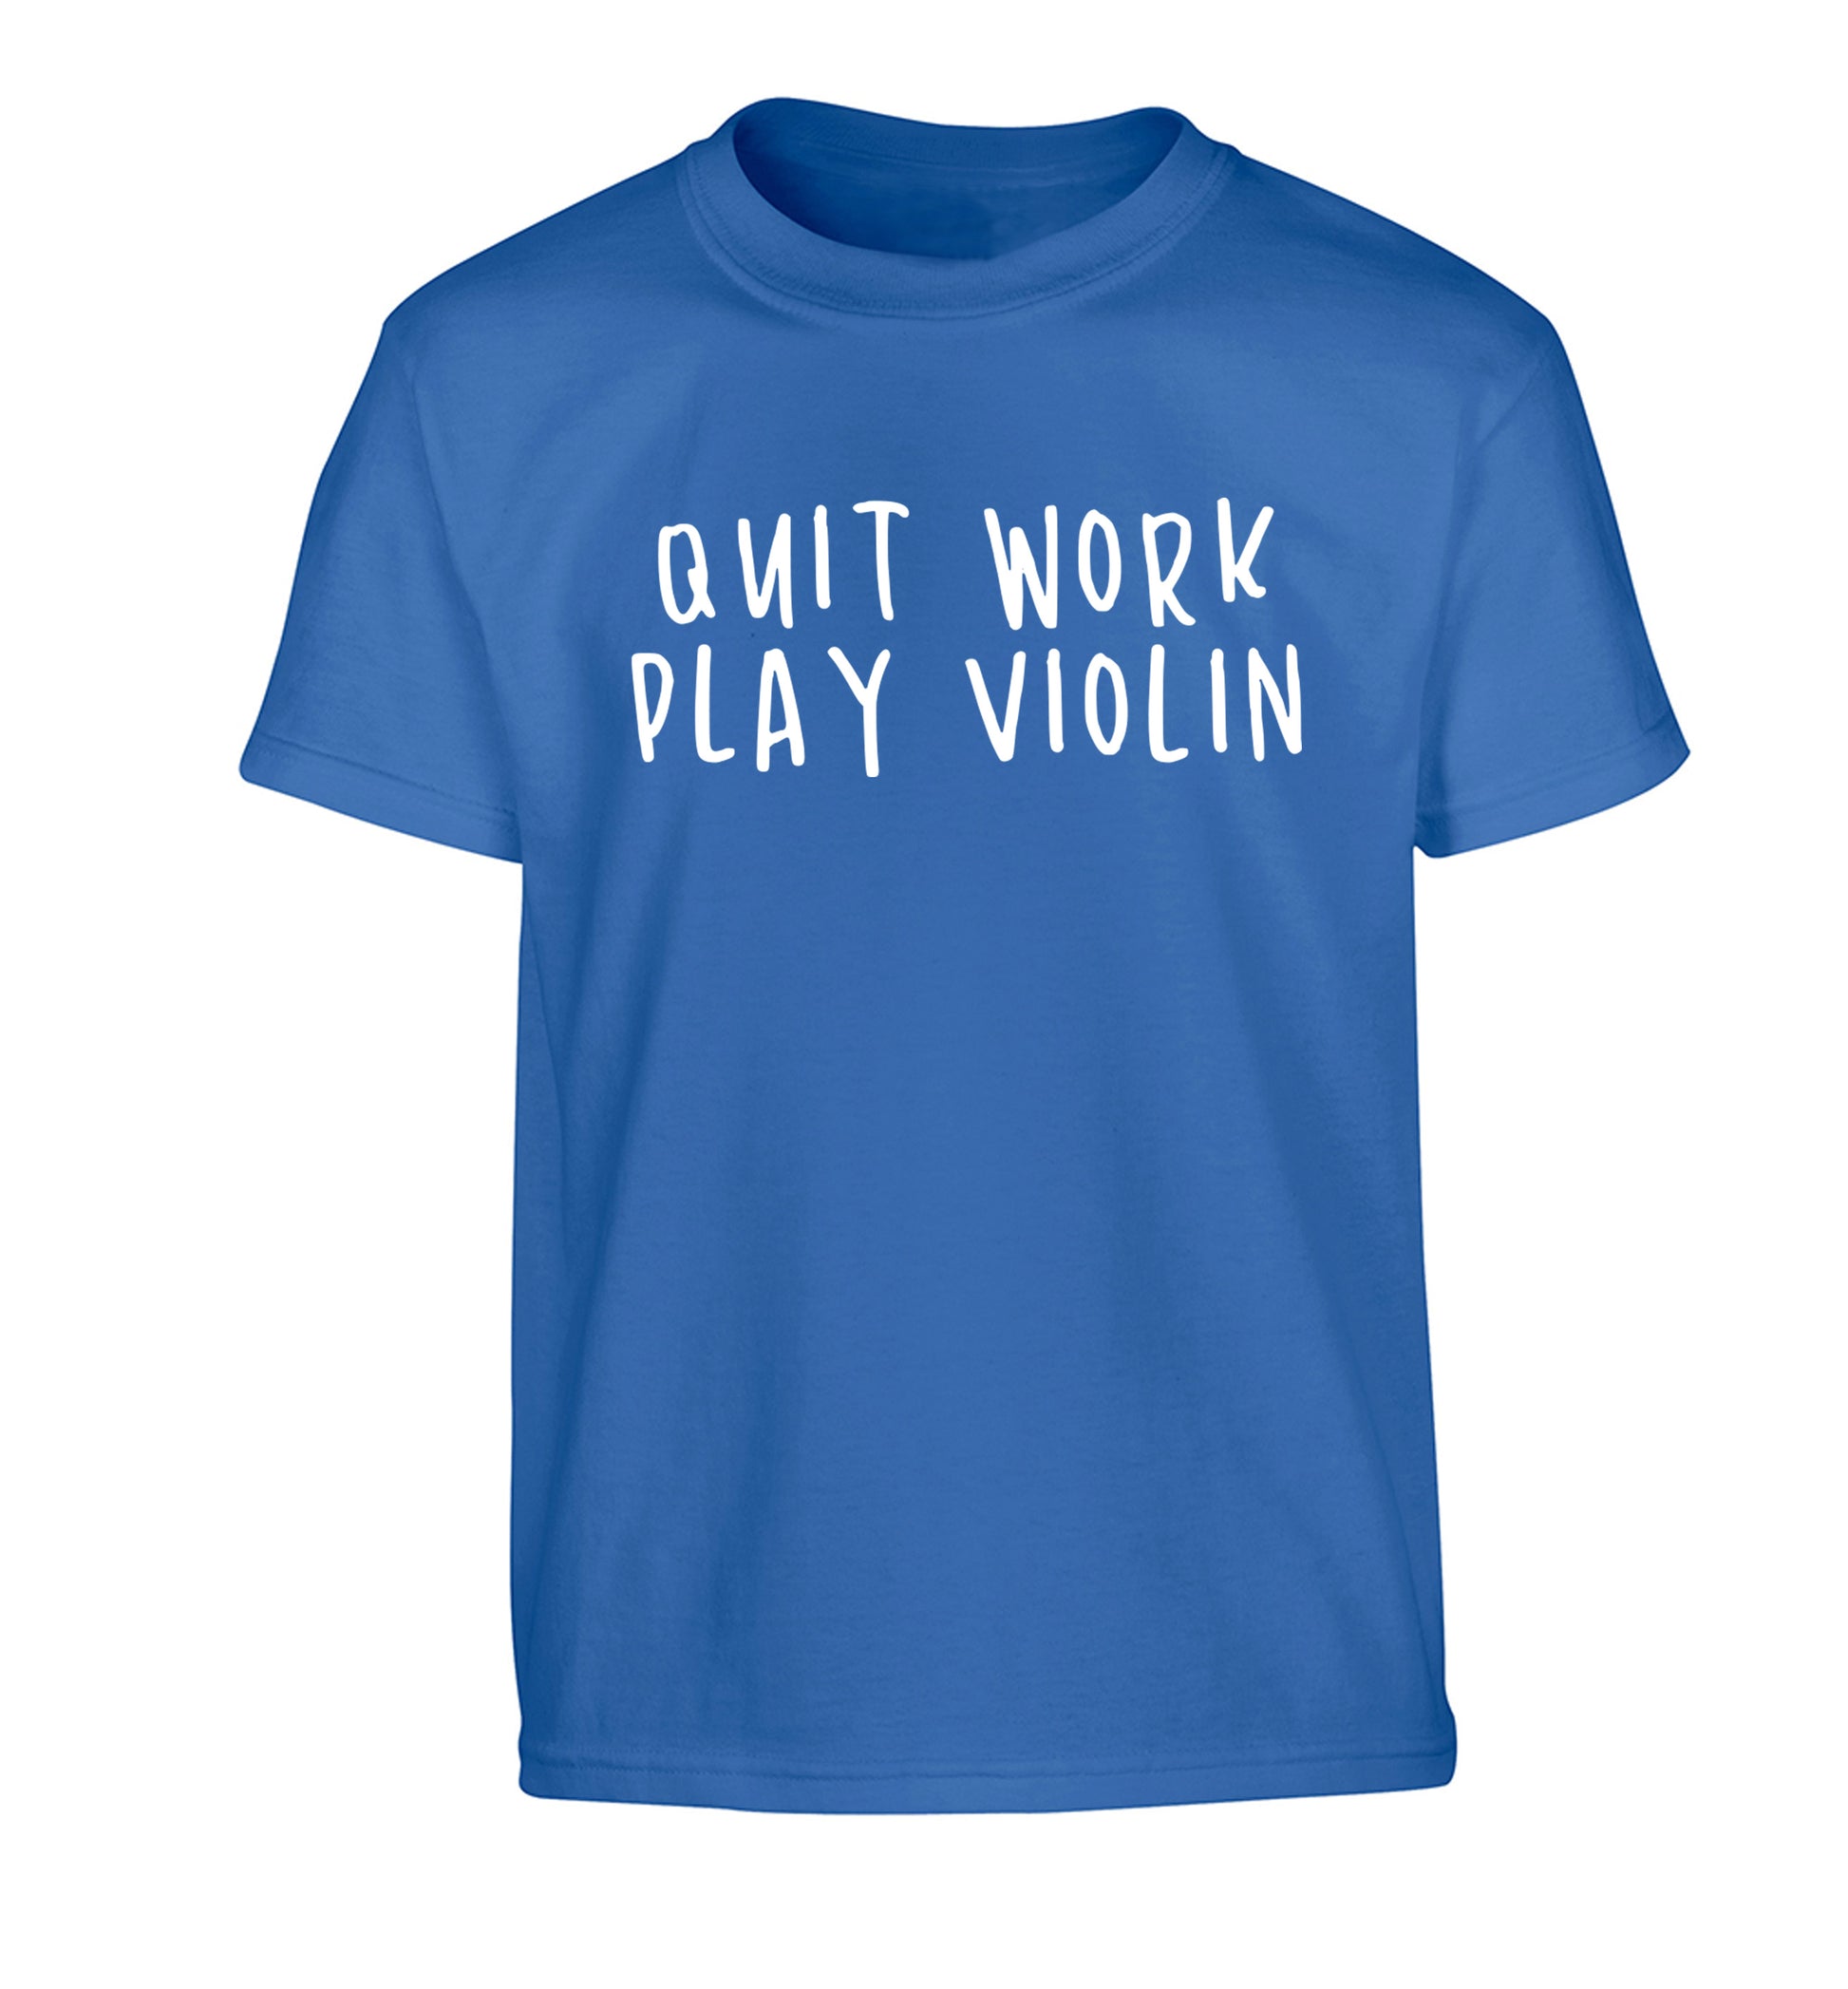 Quit work play violin Children's blue Tshirt 12-13 Years